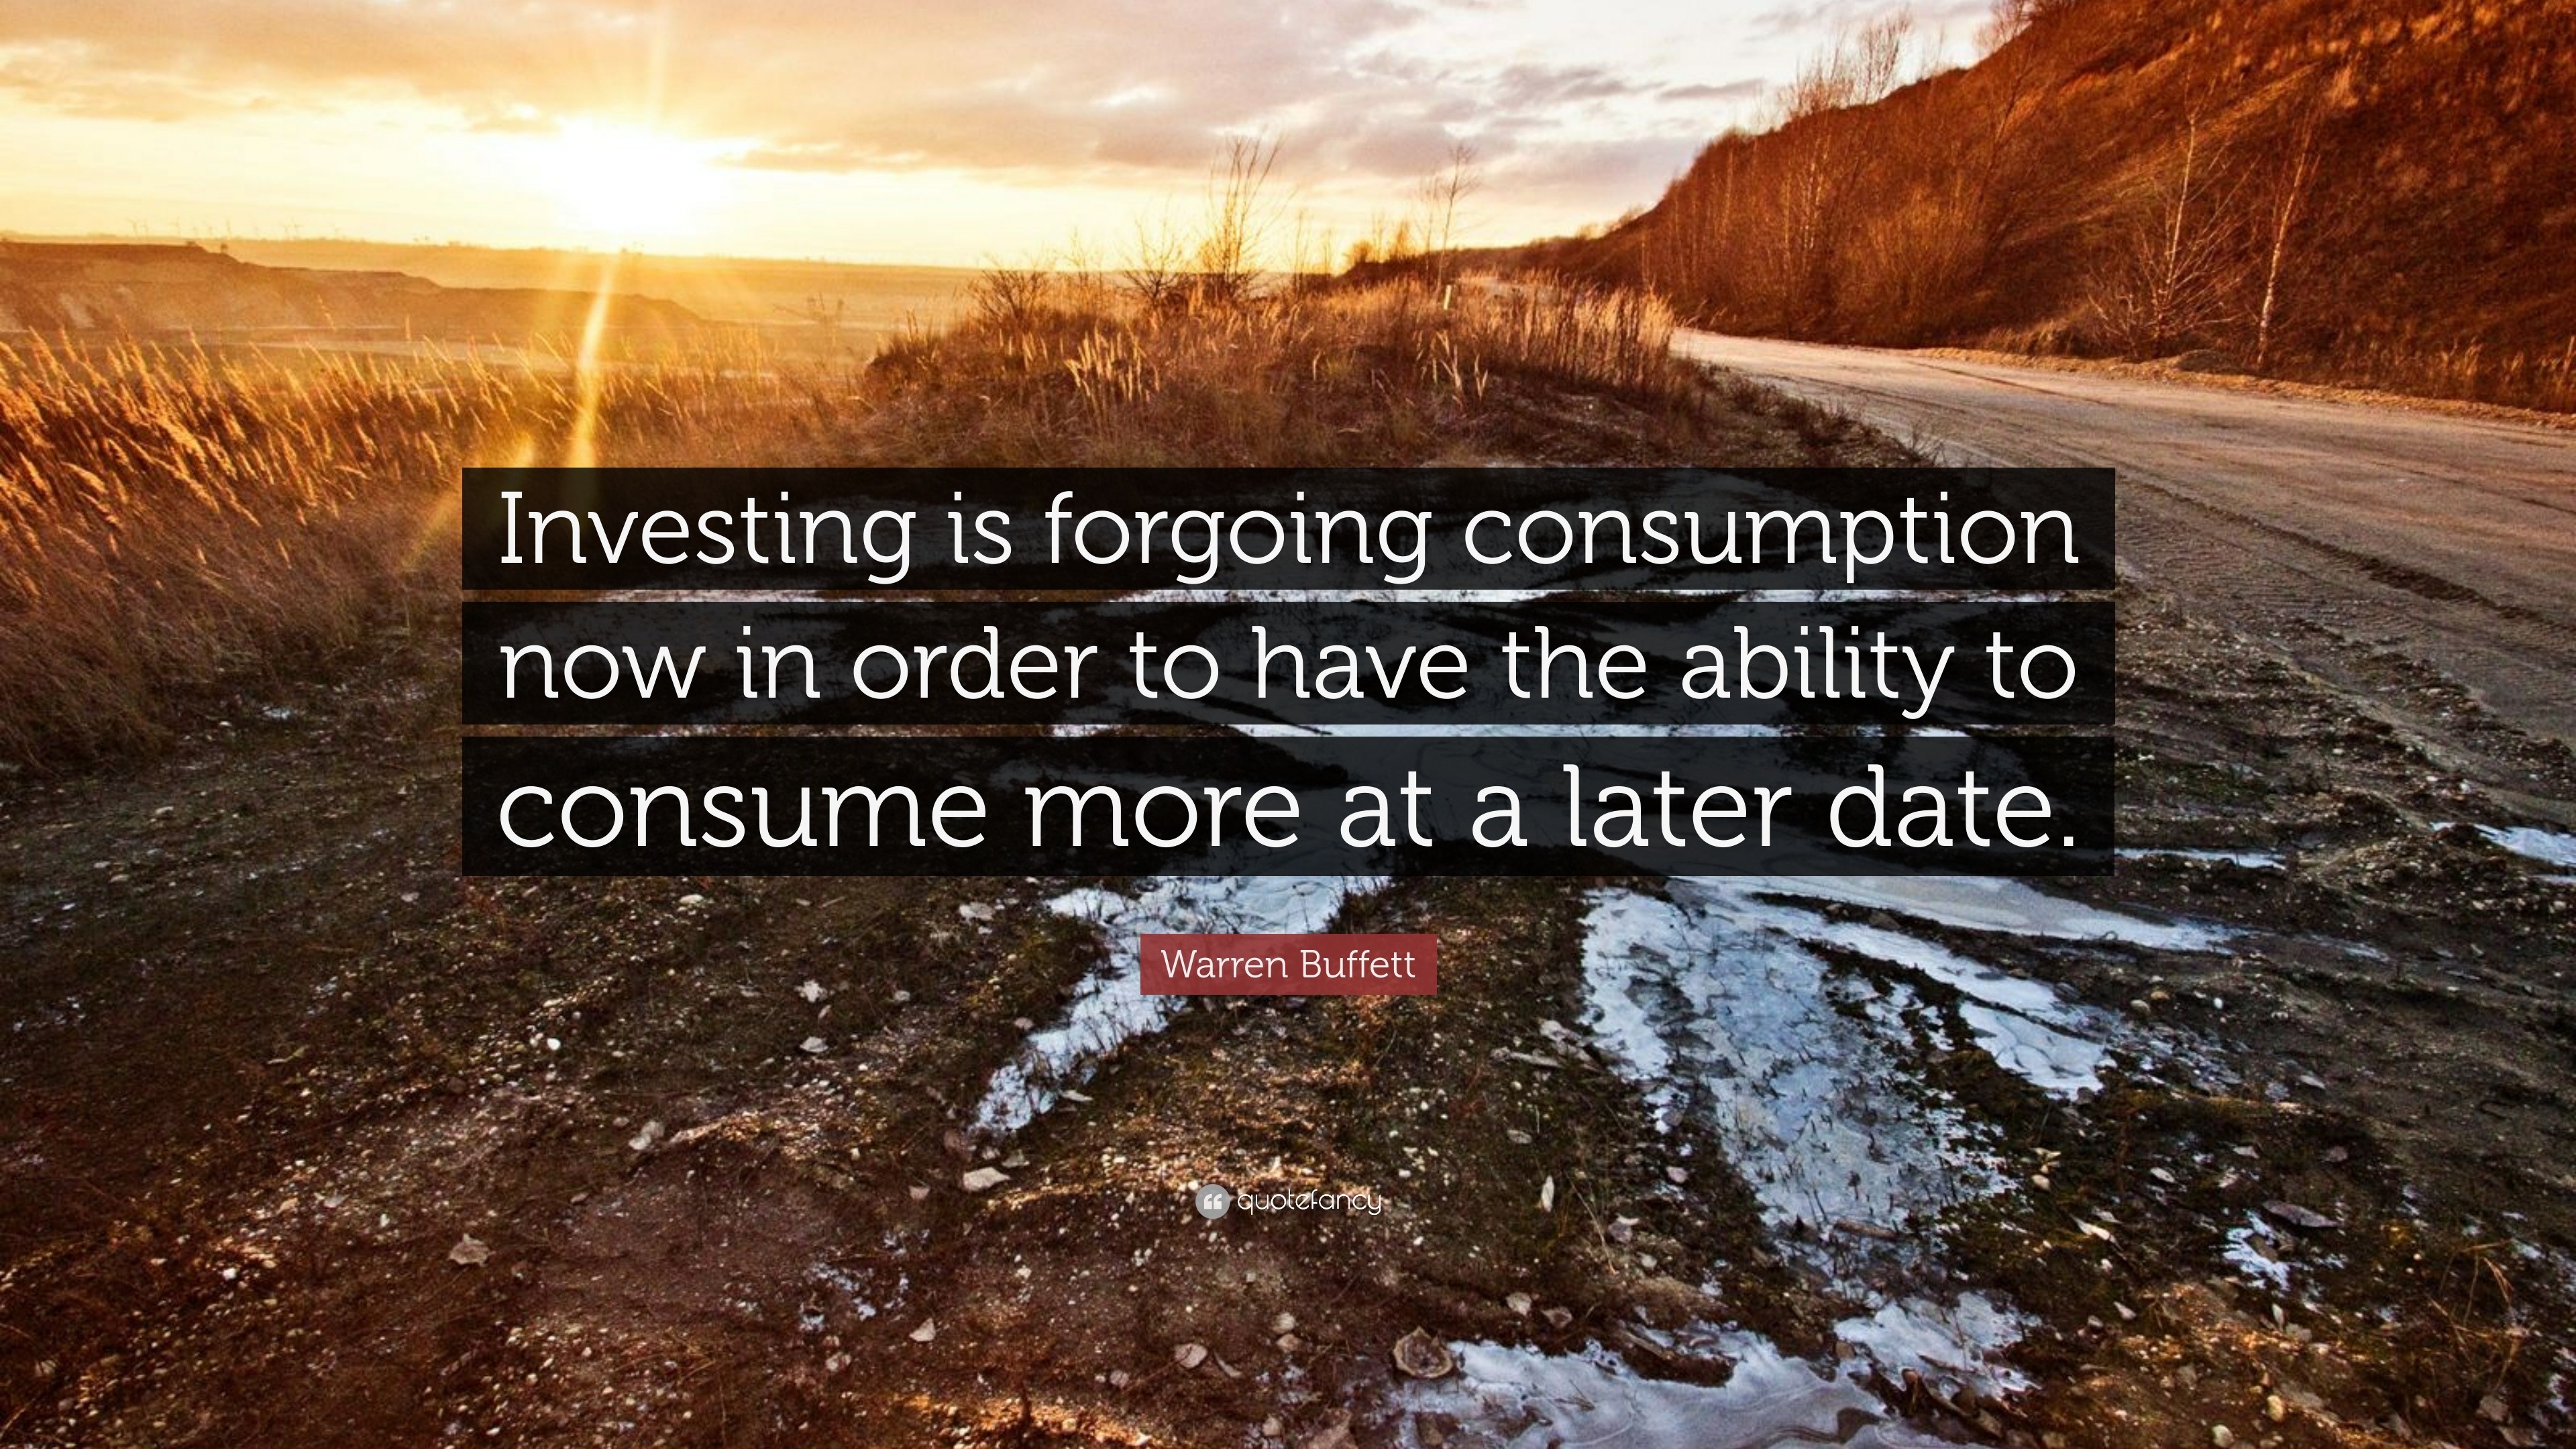 Warren Buffett Quote “Investing is consumption